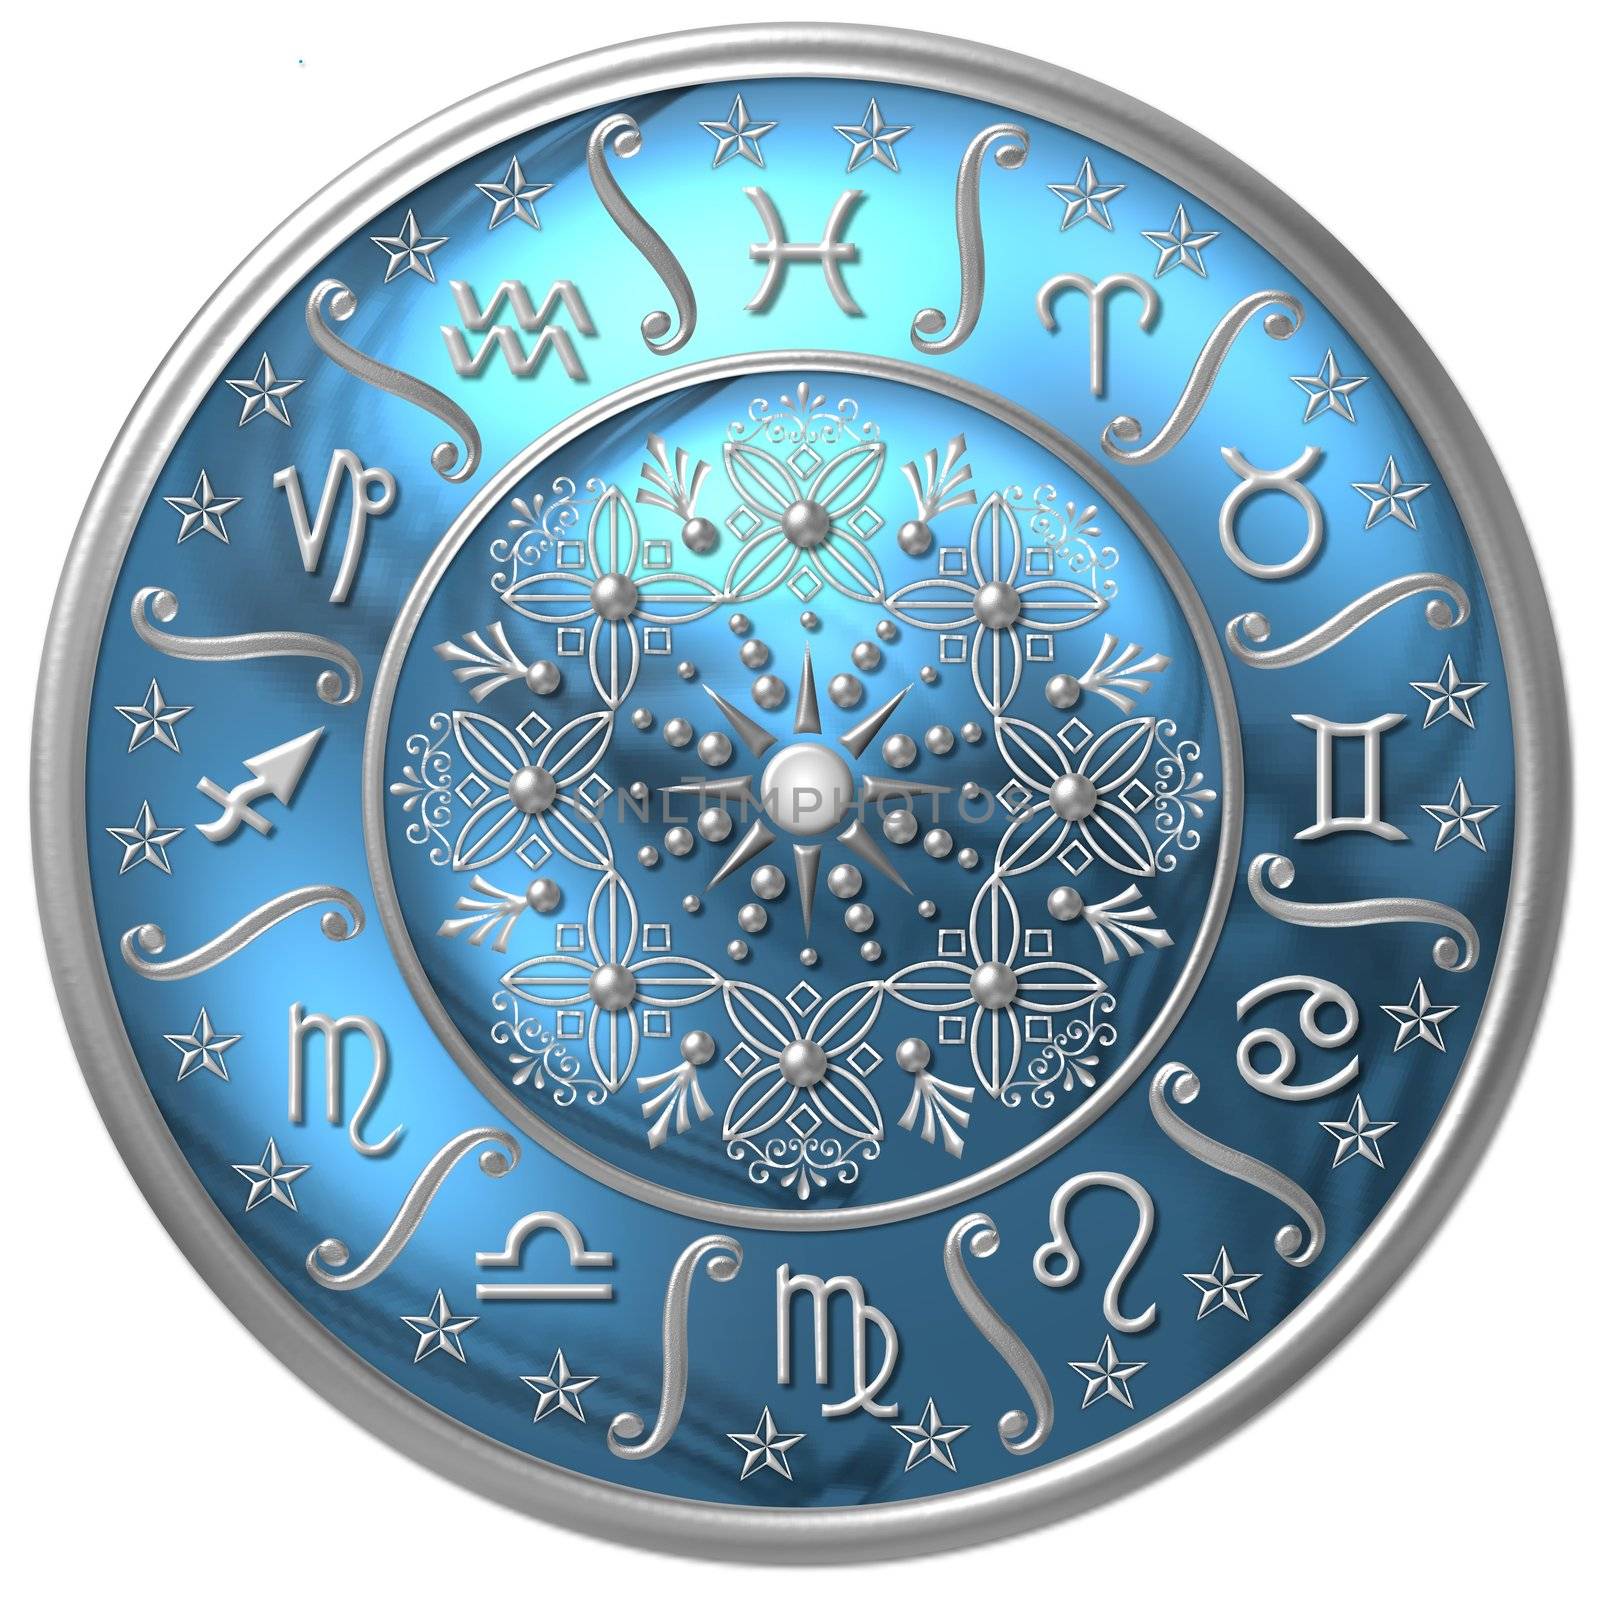 Zodiac Disc by peromarketing